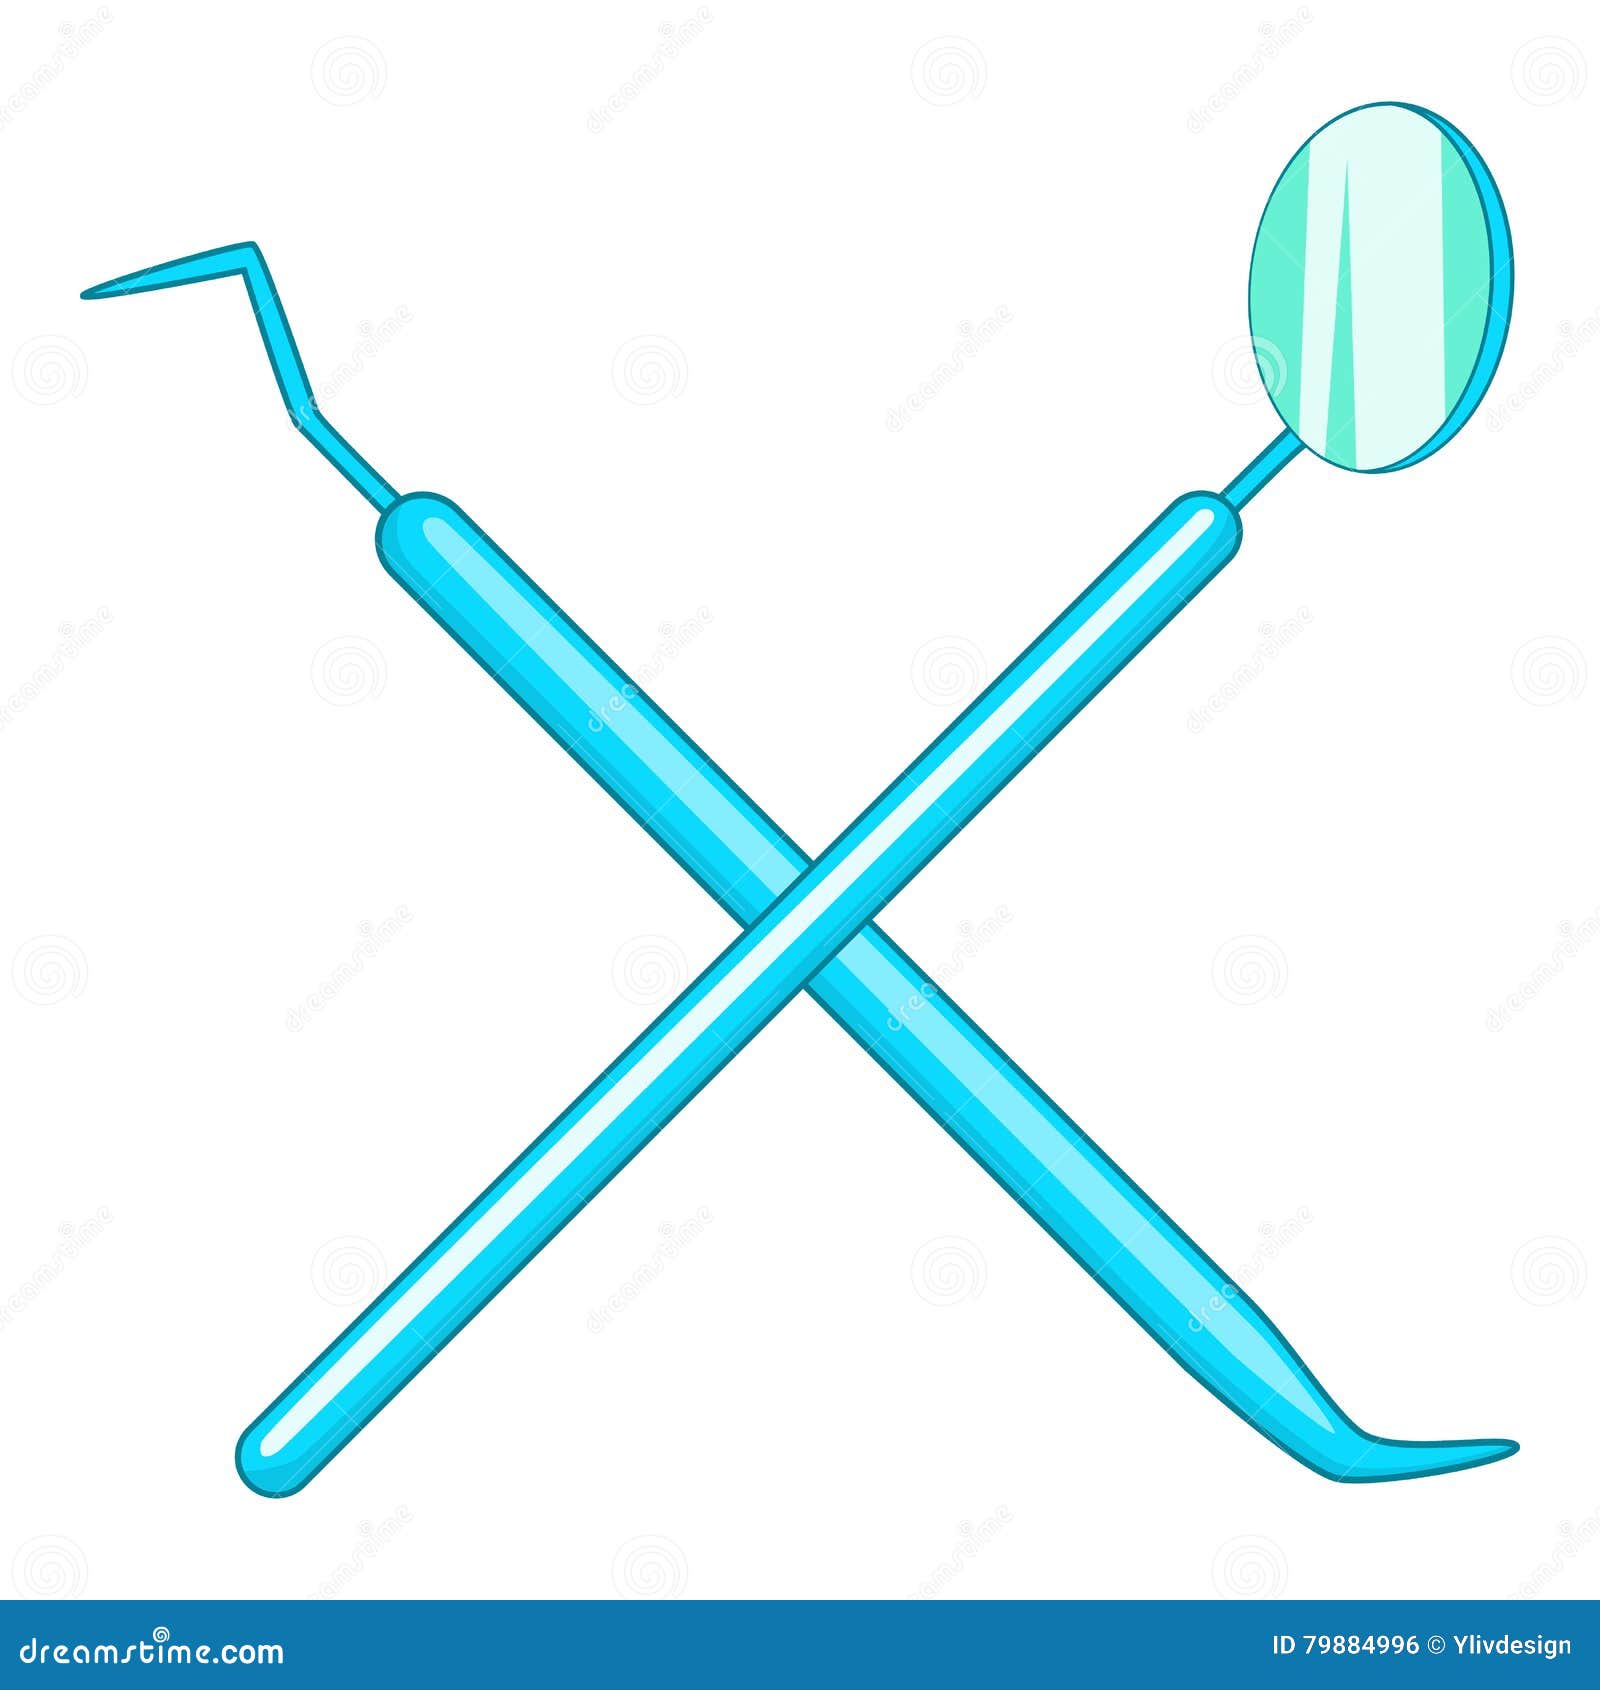 dental-tools-icon-cartoon-style-illustration-vector-web-design-79884996.jpg